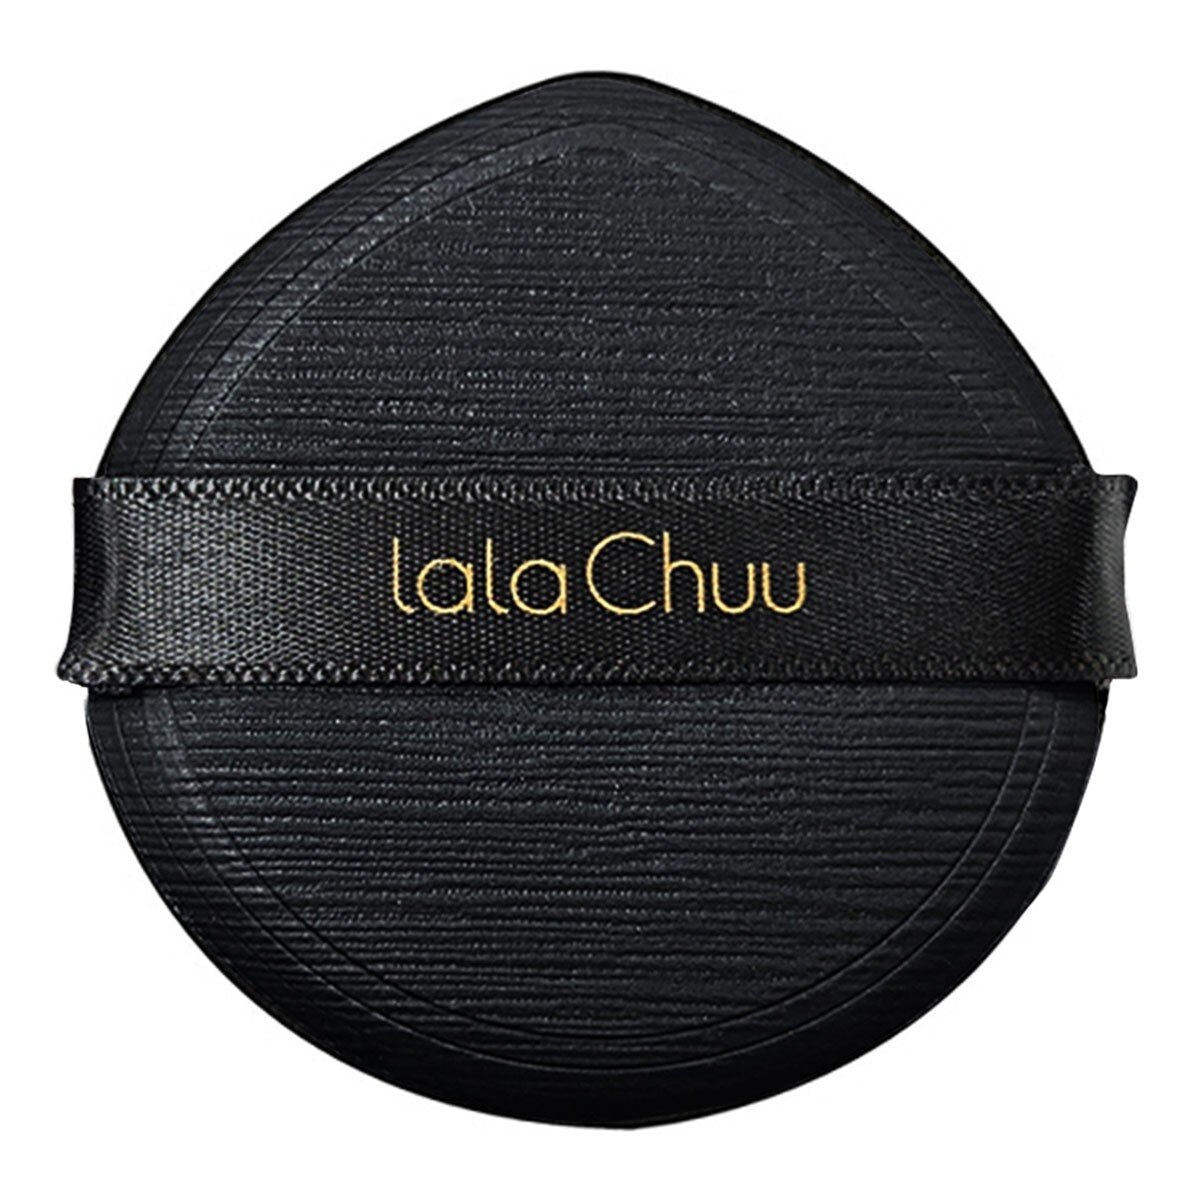 LalaChuu 氣墊遮髮餅 自然黑 粉餅 + 替換芯 + 粉撲 X 2入組